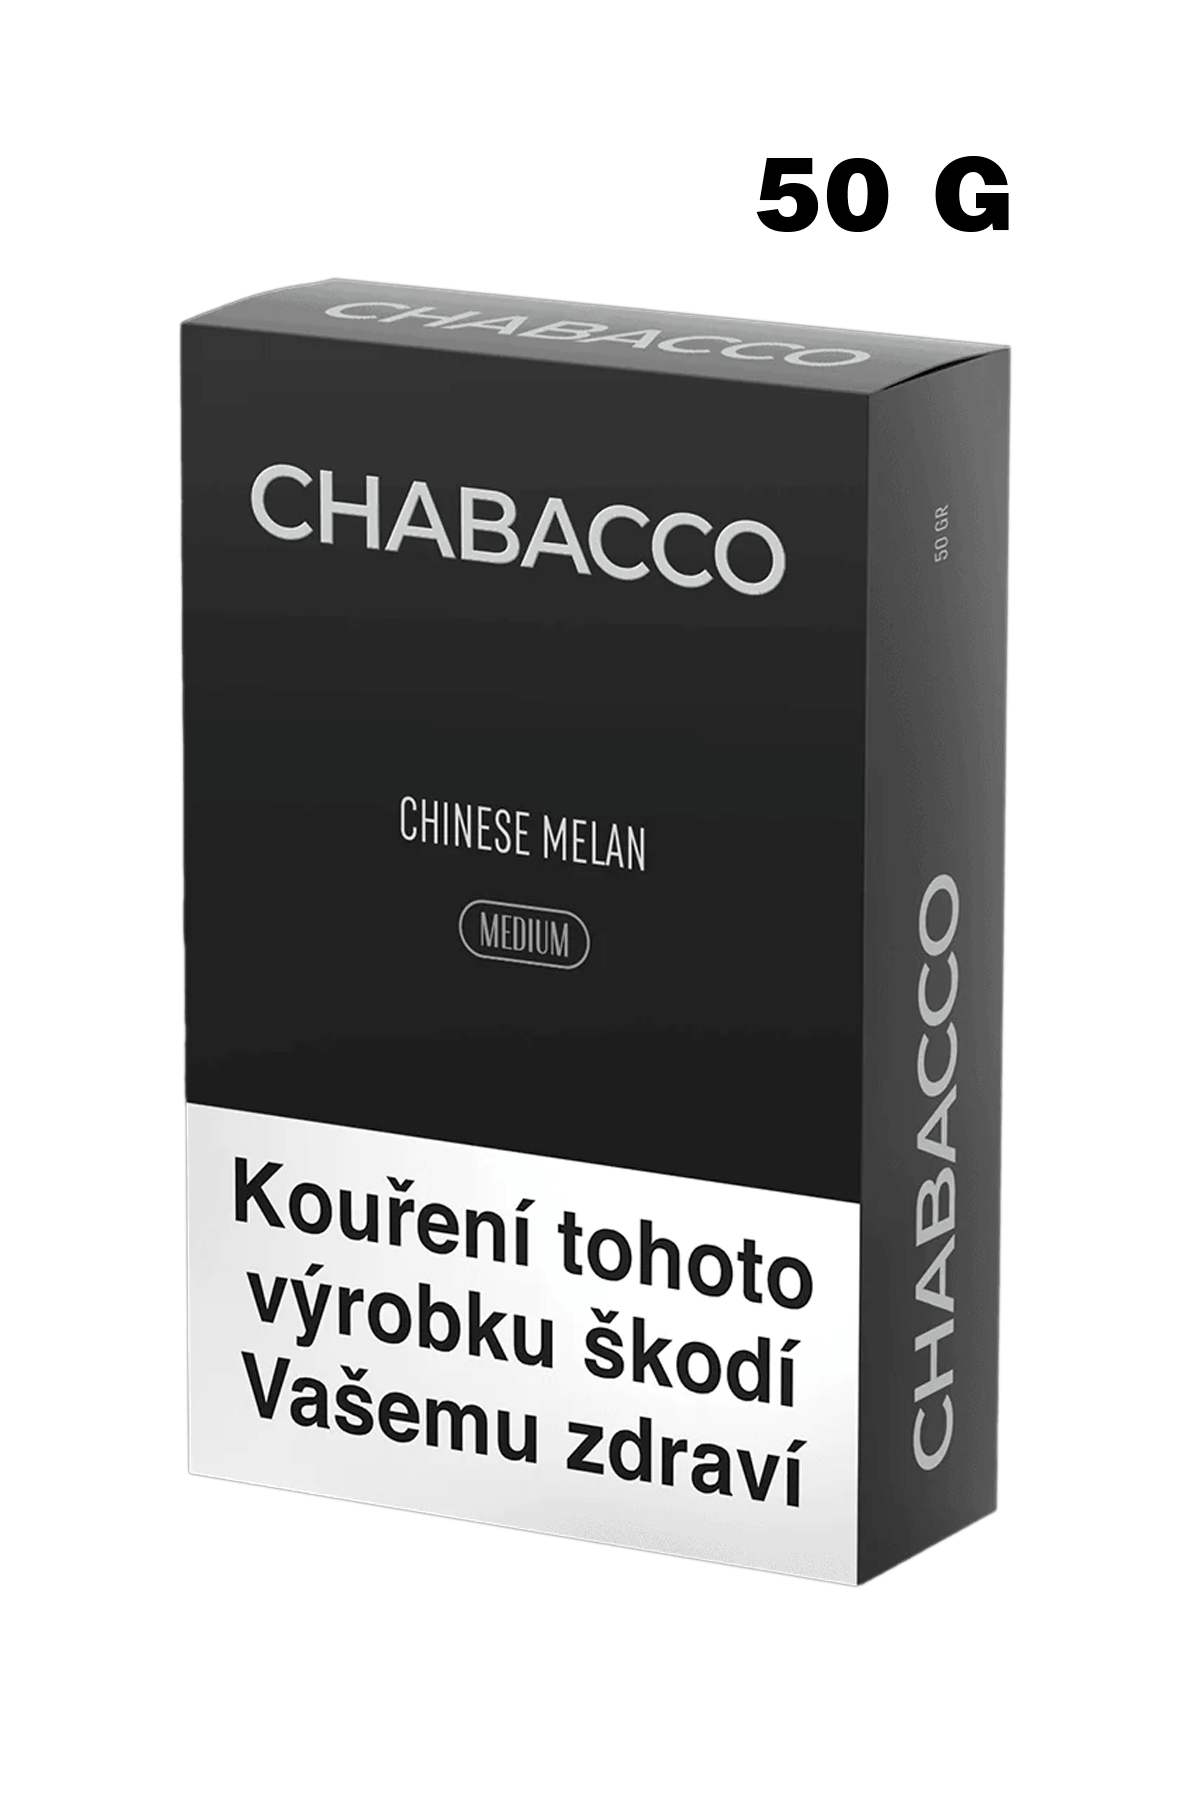 Tobacco - Chabacco Medium 50g - Chinese Melan